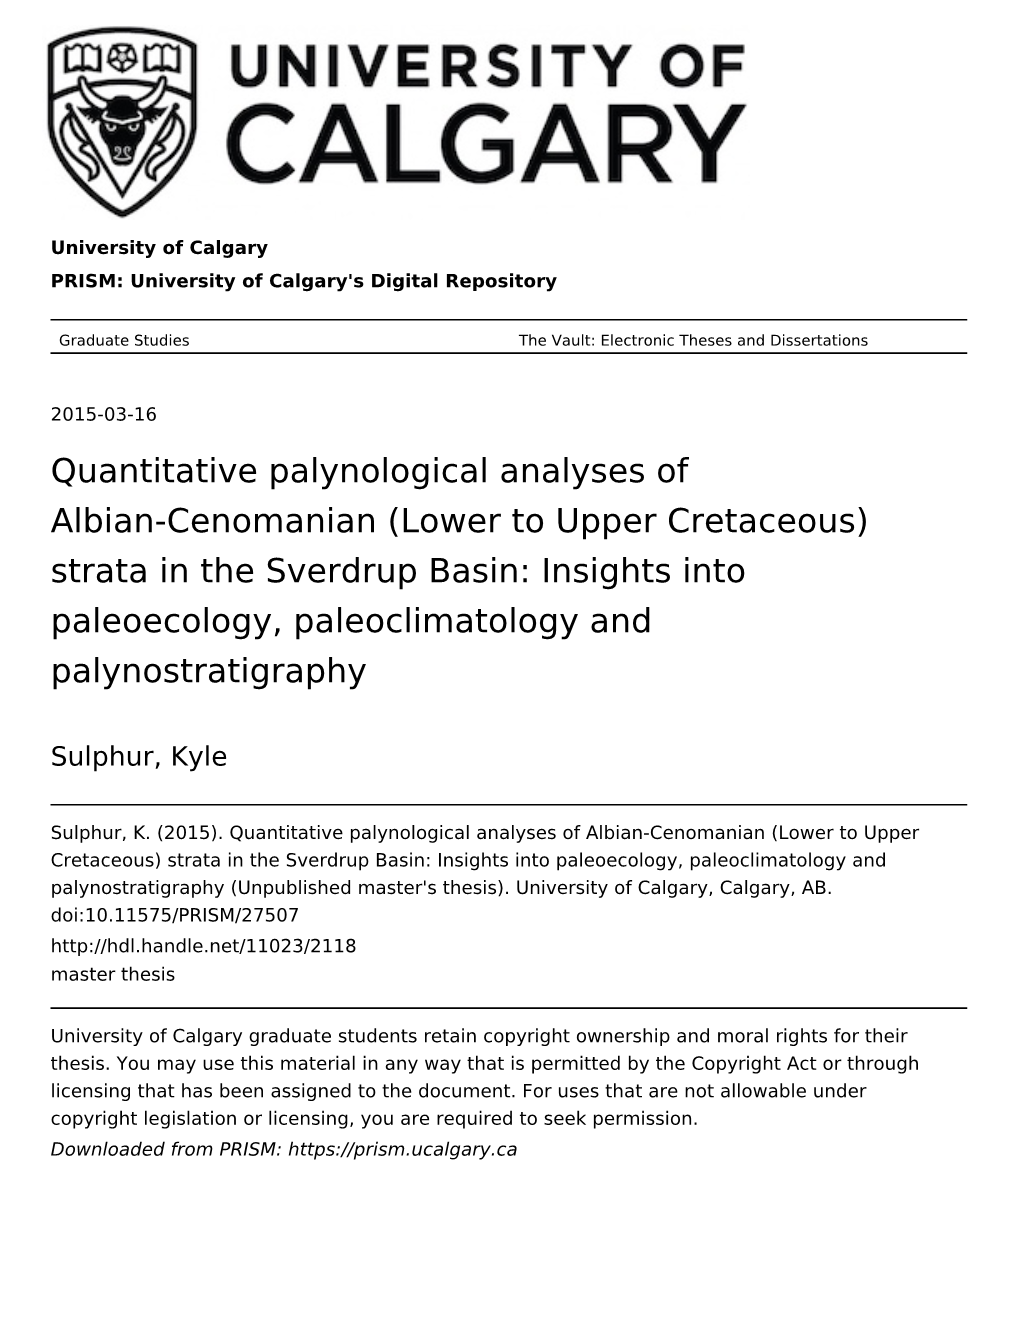 Quantitative Palynological Analyses Of